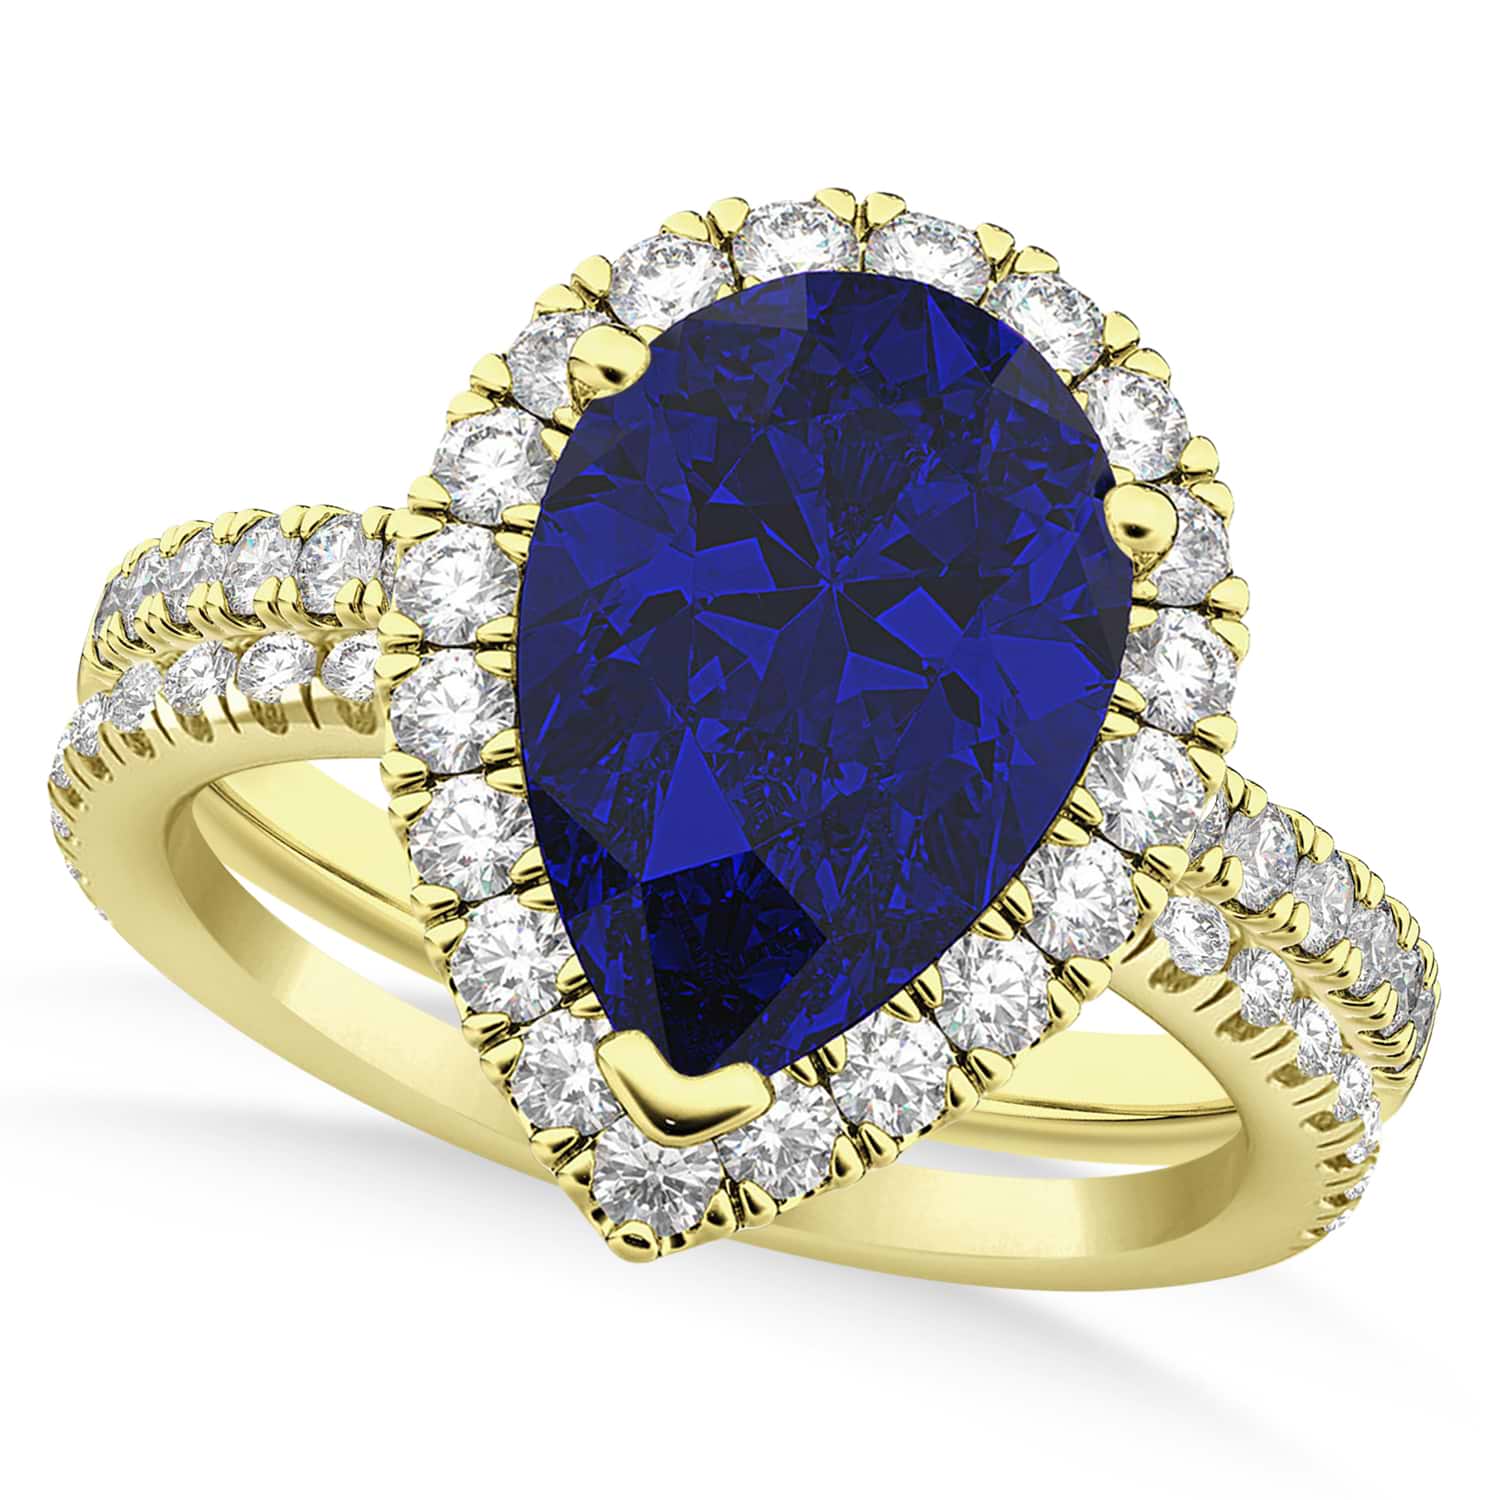 Lab Blue Sapphire & Lab Grown Diamonds Pear-Cut Halo Bridal Set 14K Yellow Gold (3.28ct)